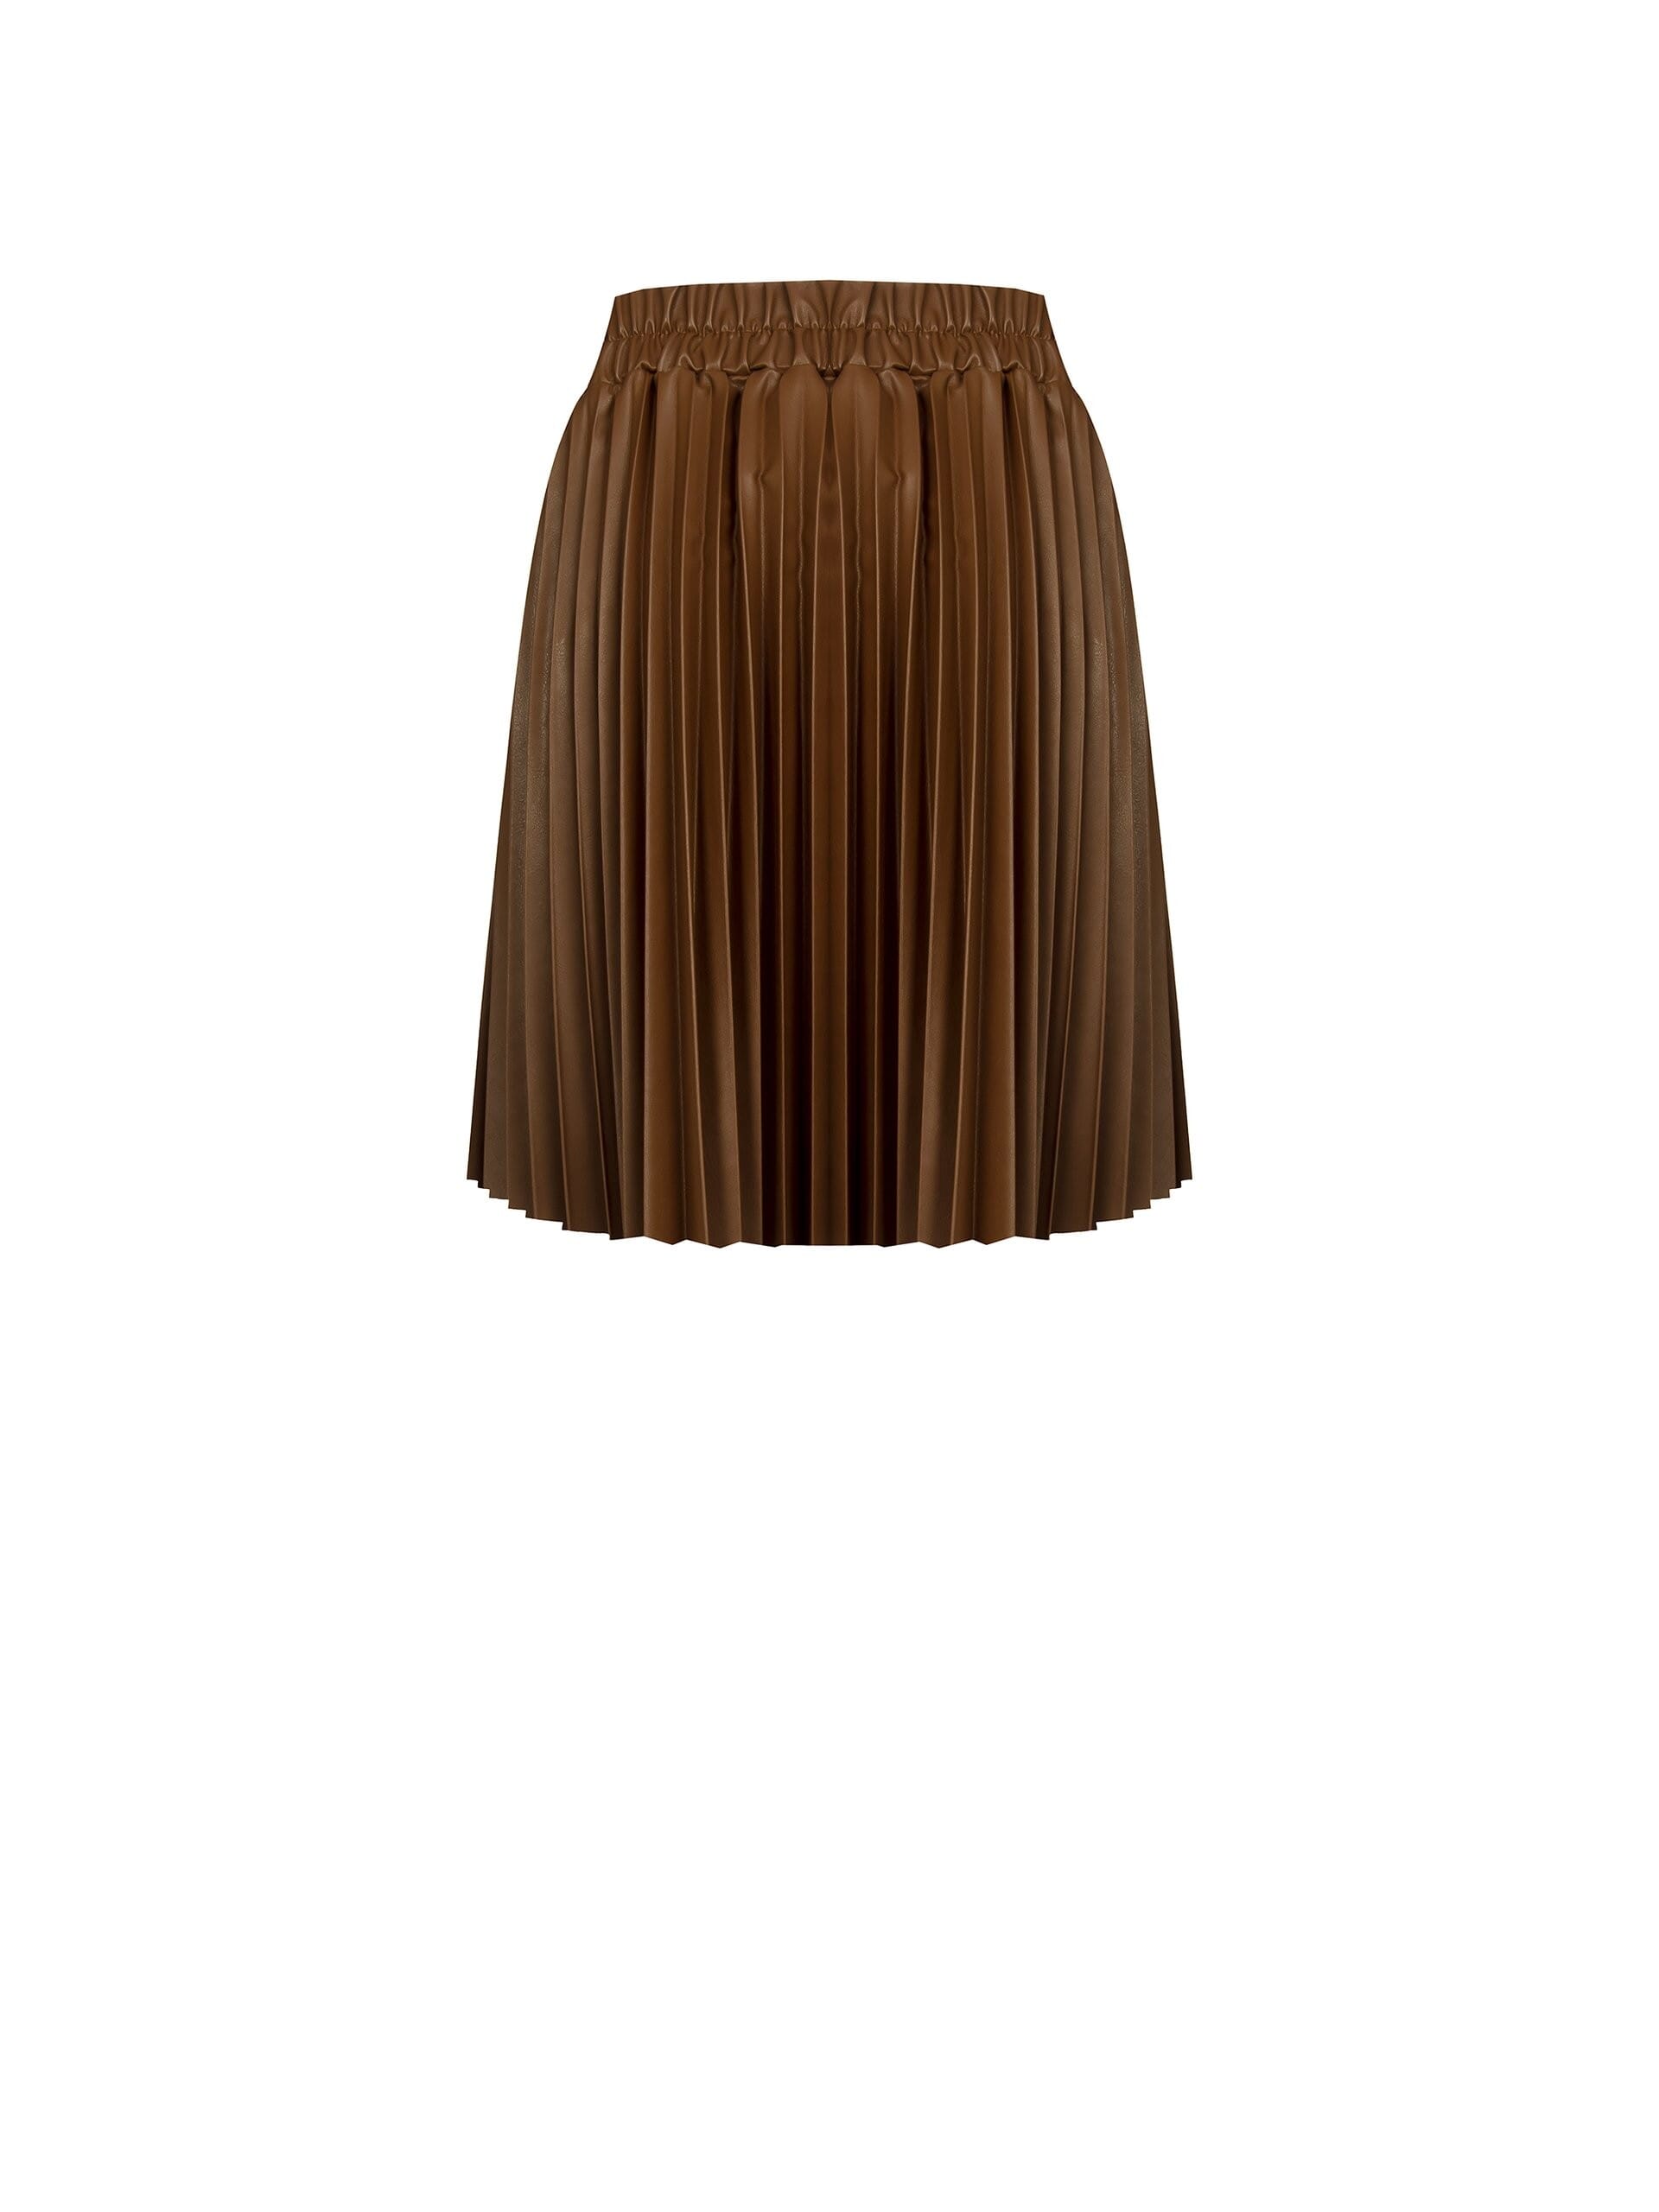 Pleated skirt in Renaissance leatherette